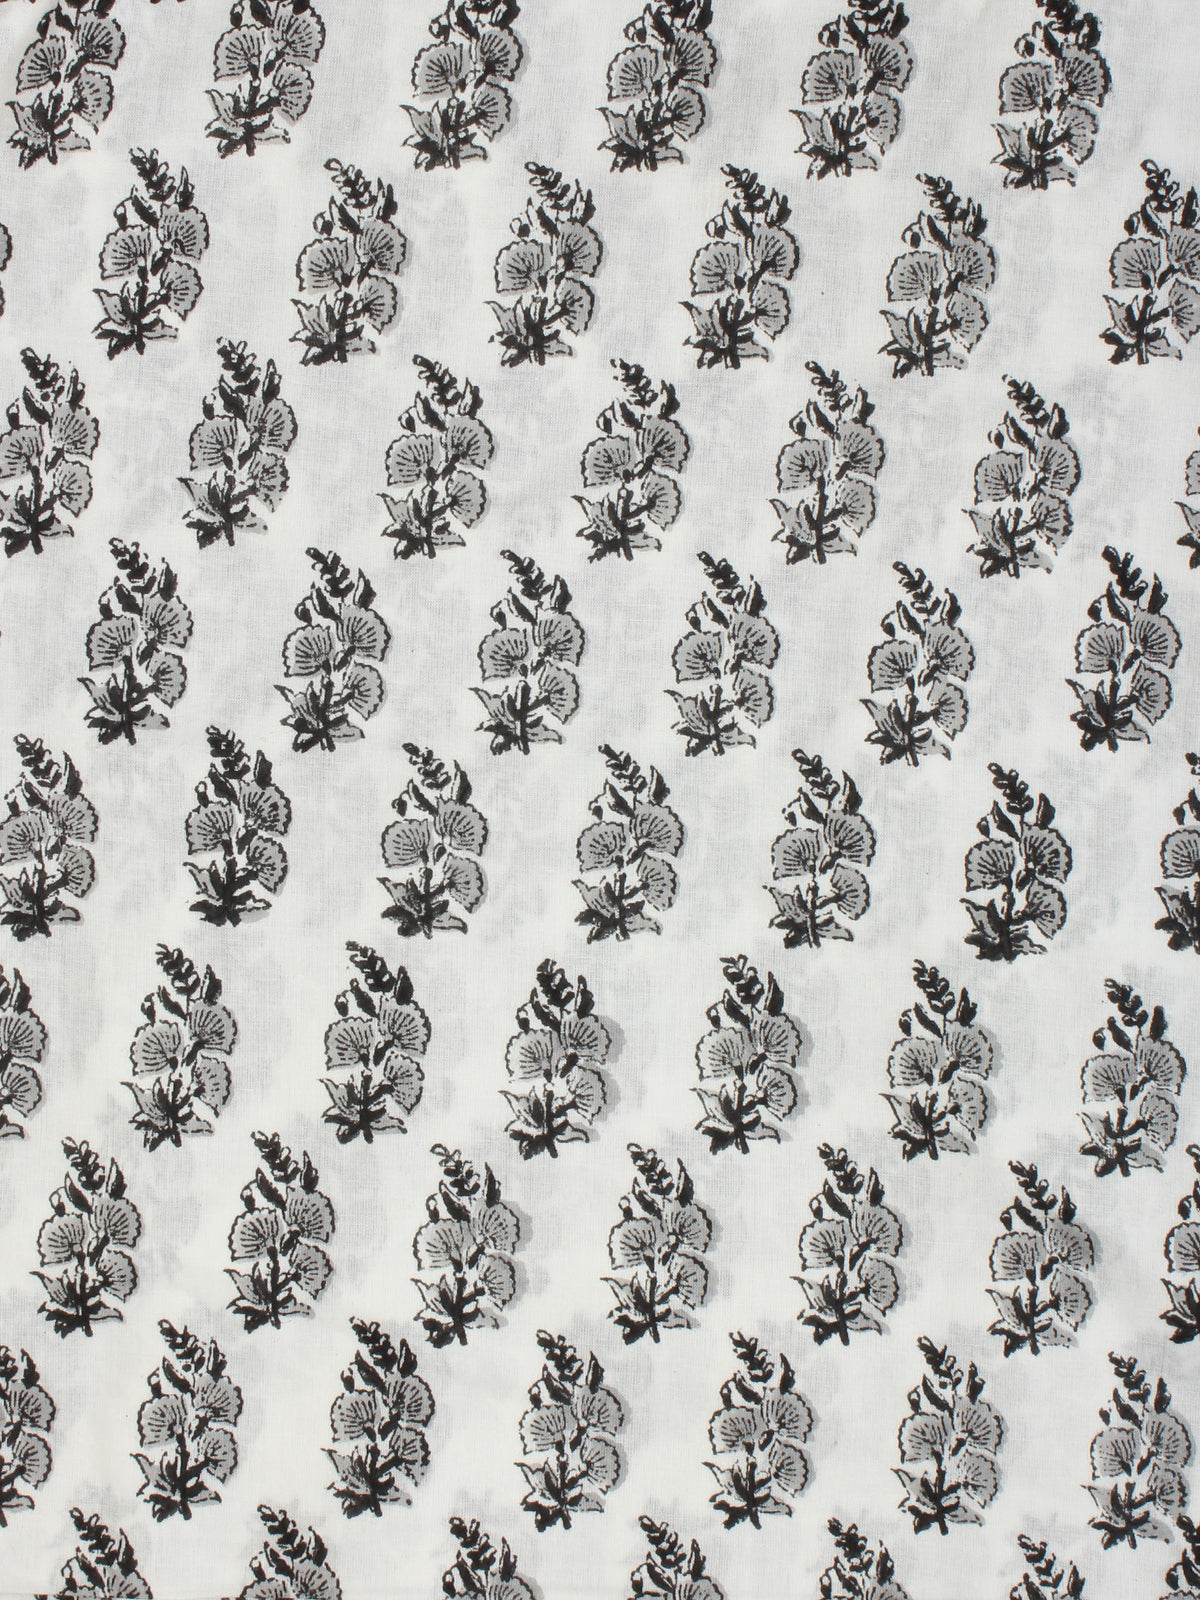 White Grey Black Block Printed Cotton Fabric Per Meter - F001F2241